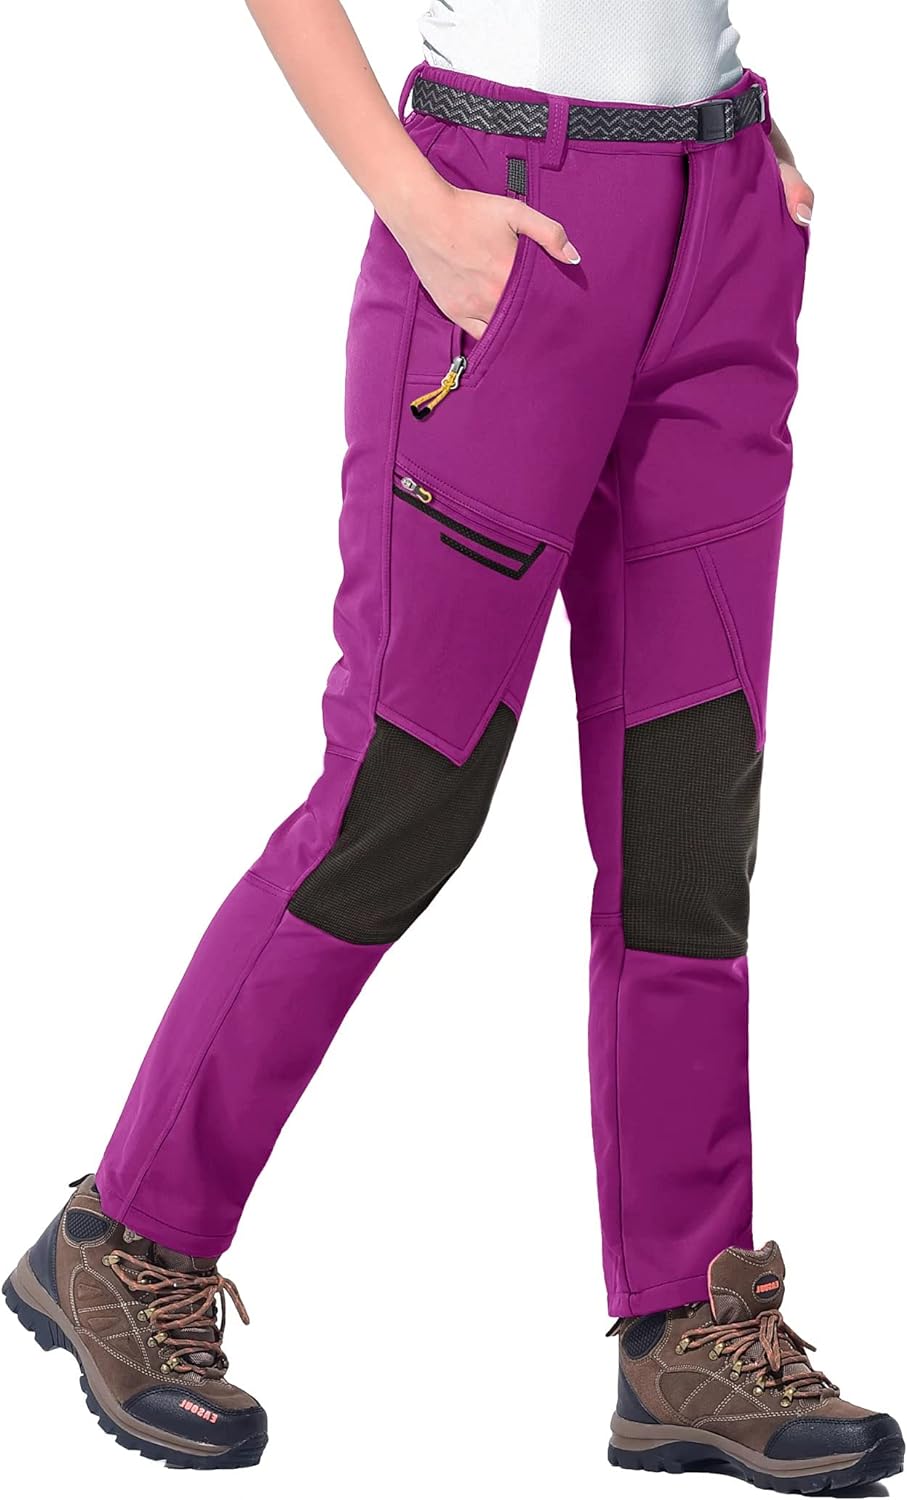 PERSIT Women's Snow Ski Pants Waterproof Windproof Fleece Lined Winter Rain Outdoor Cargo Hiking Pants with Pockets